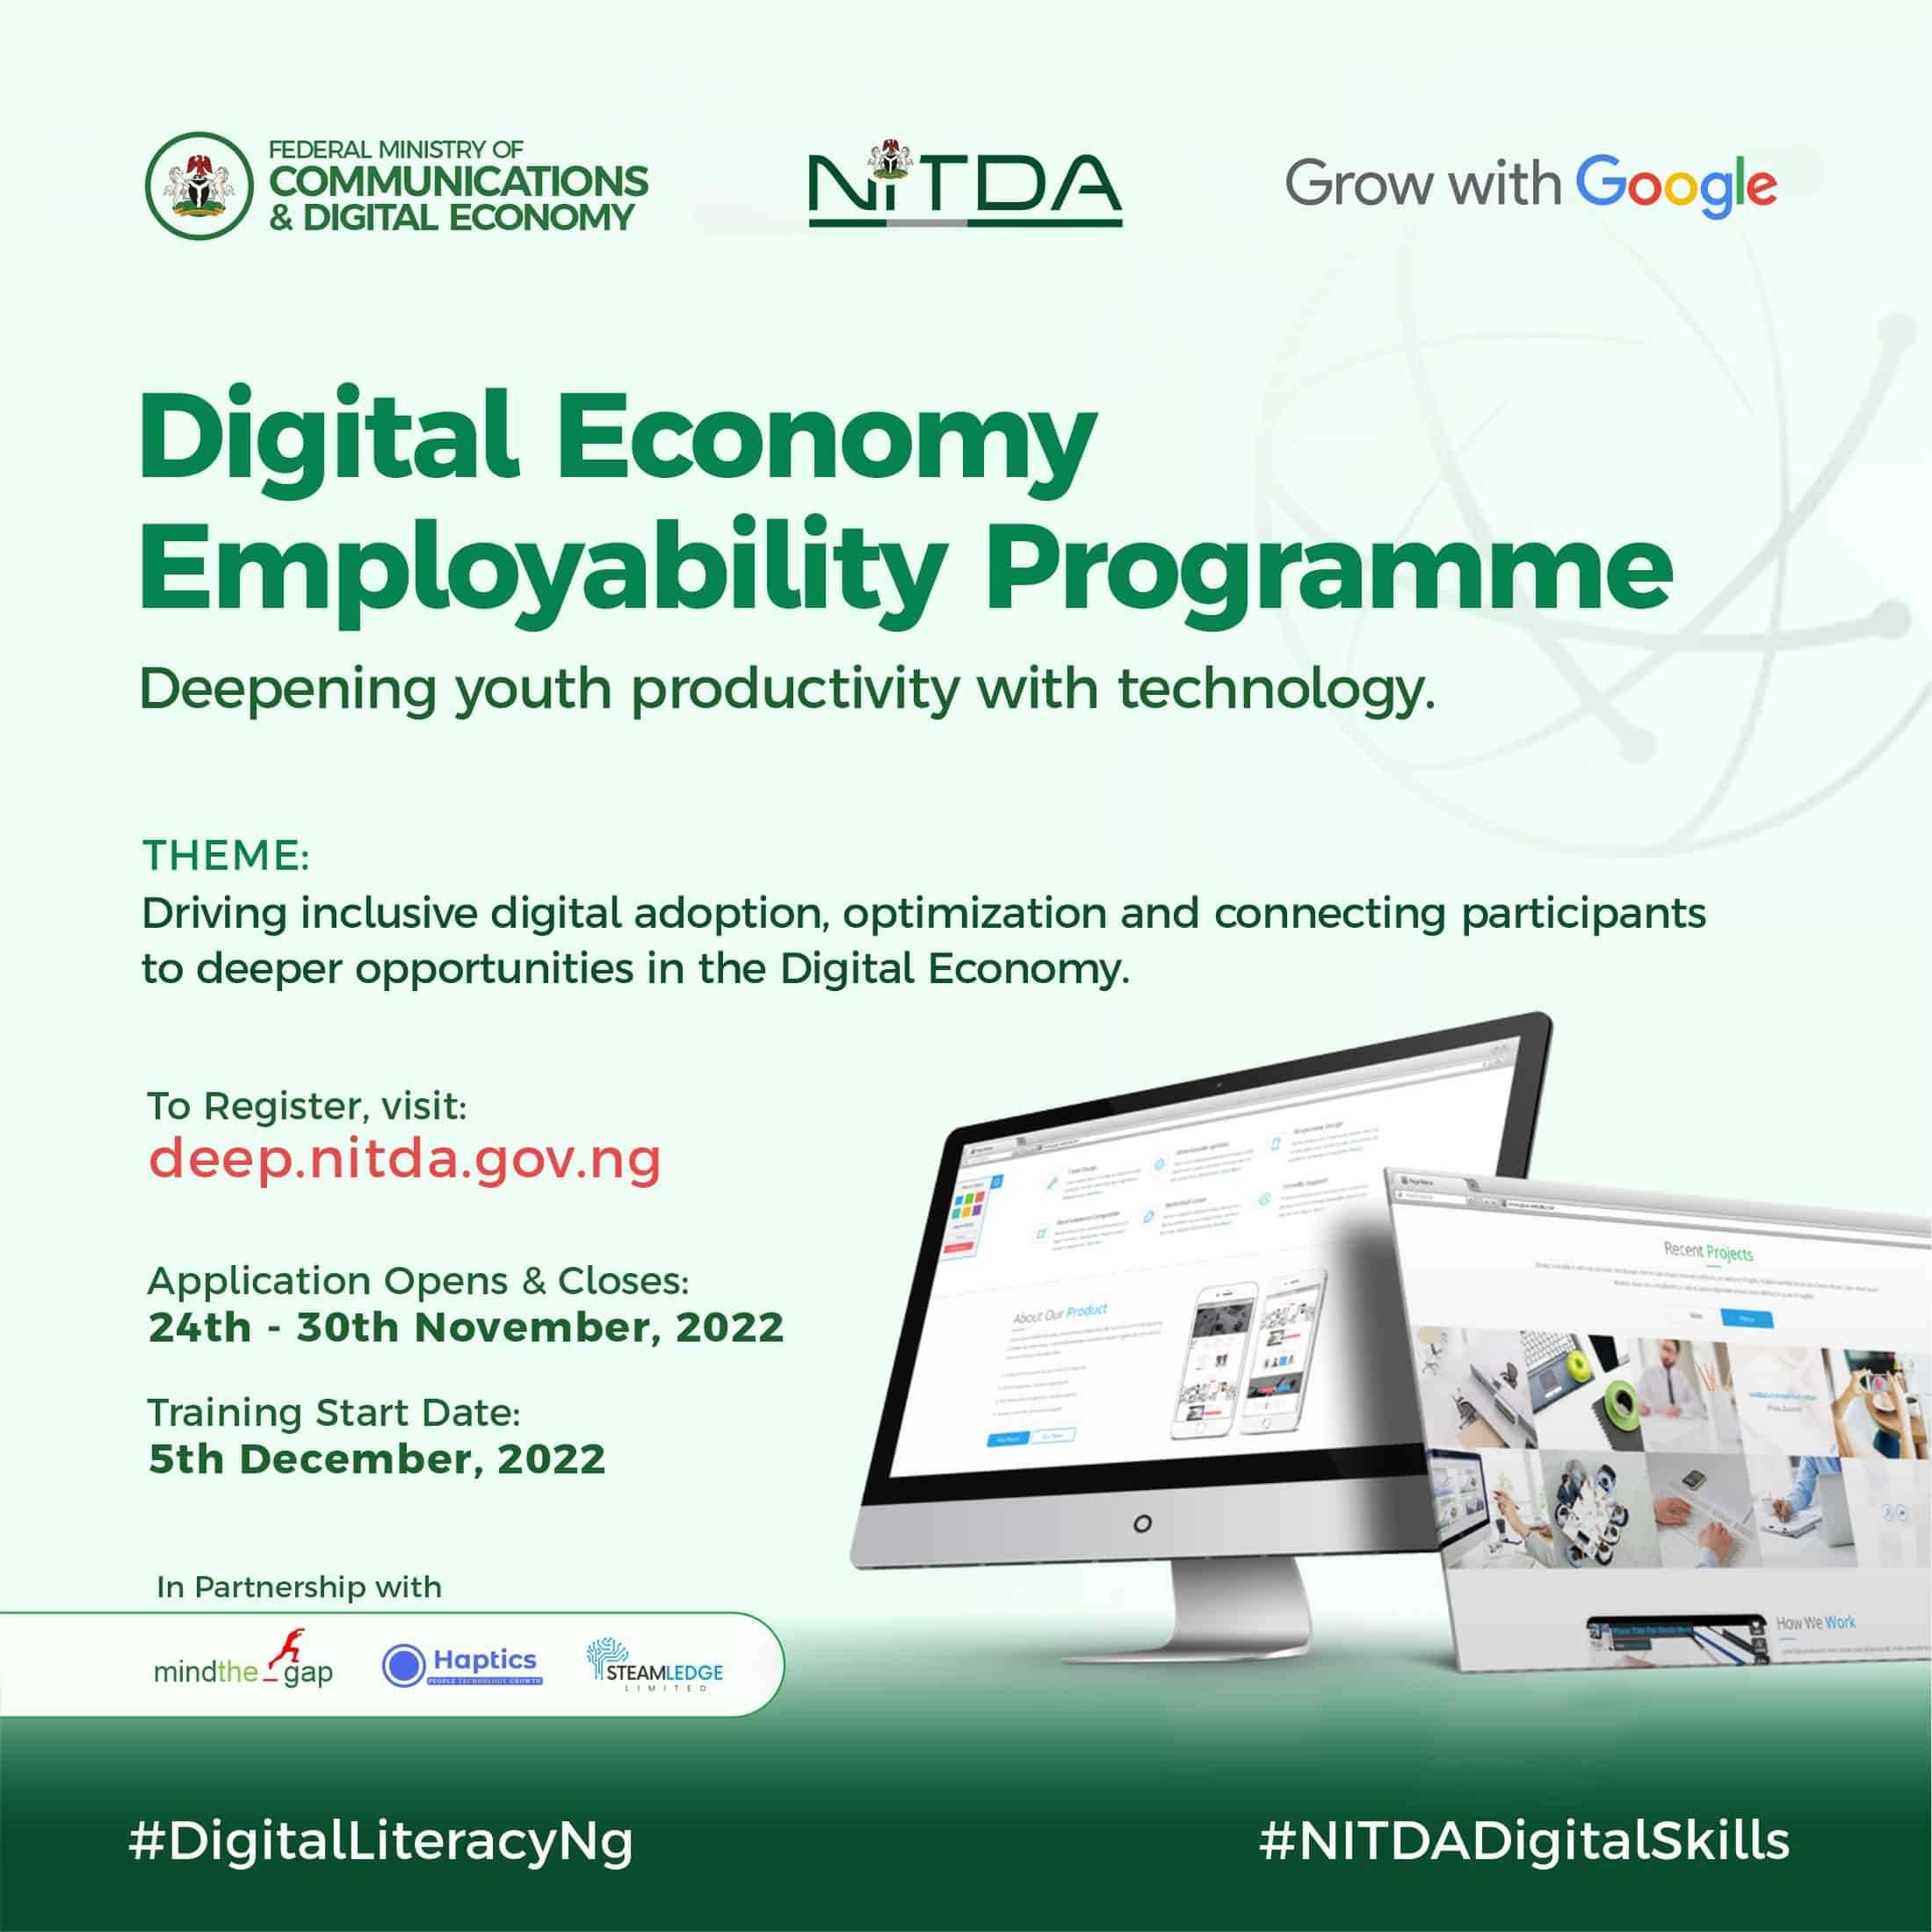 NITDA 2022 Digital Economy Employability Programme (DEEP)